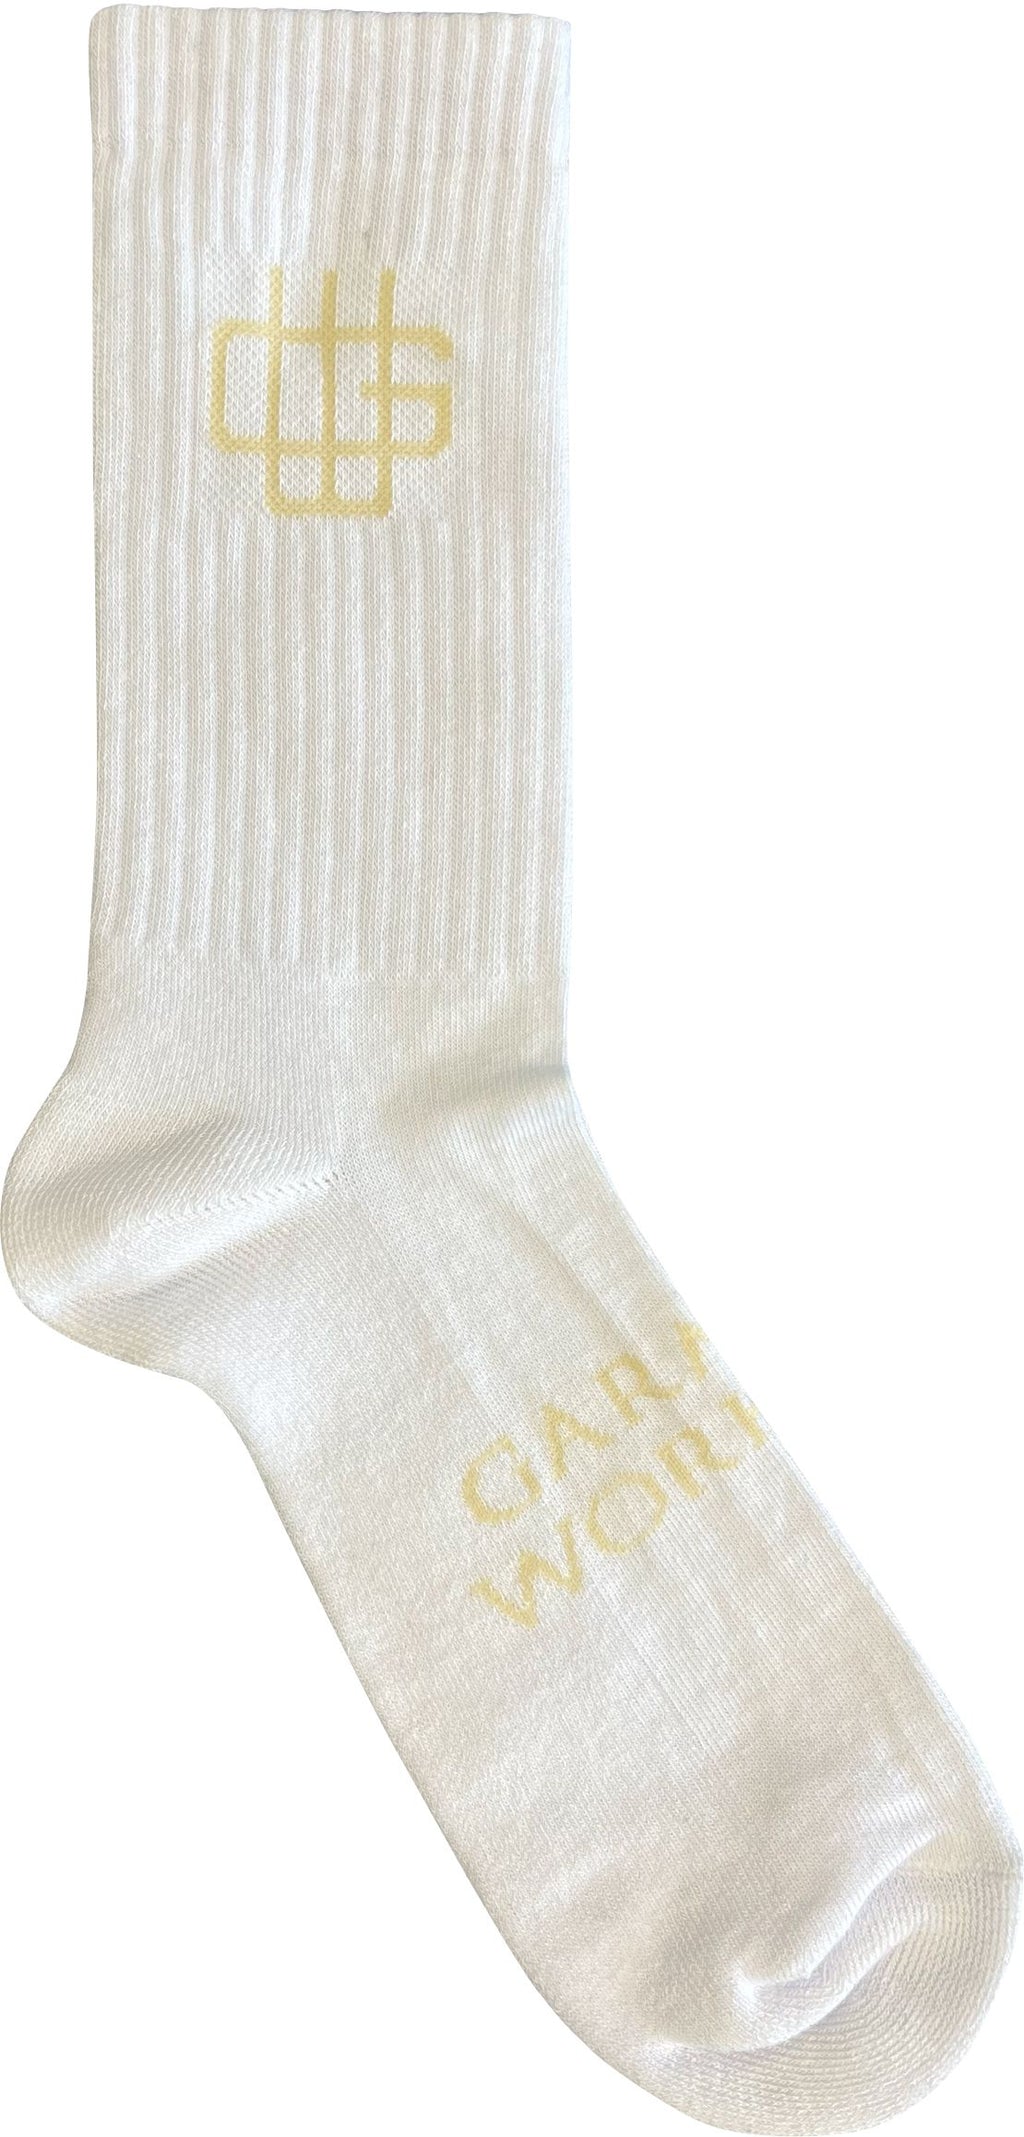  Garment Workshop Calze Socks Unisex White Uomo Bianco